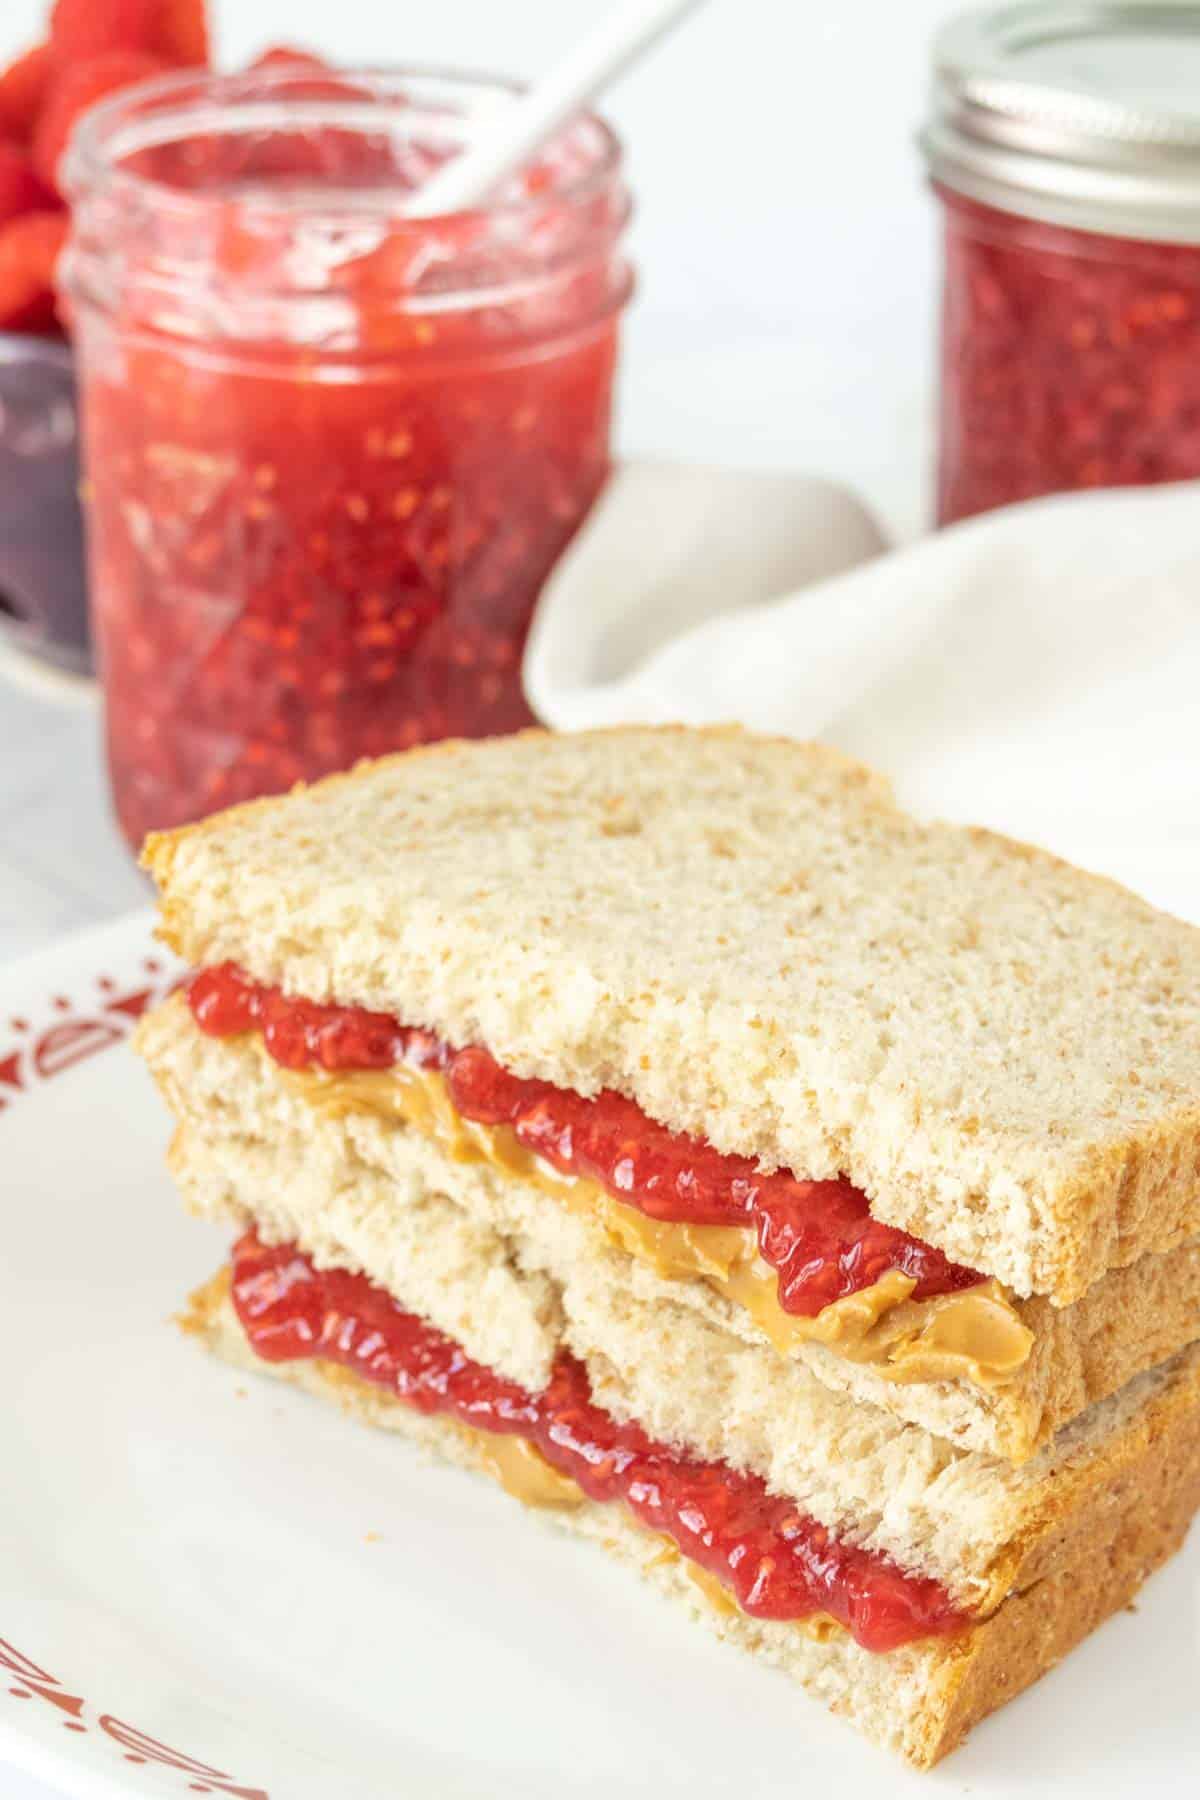 Raspberry jam sandwich on a plate with a jar of raspberry jam.